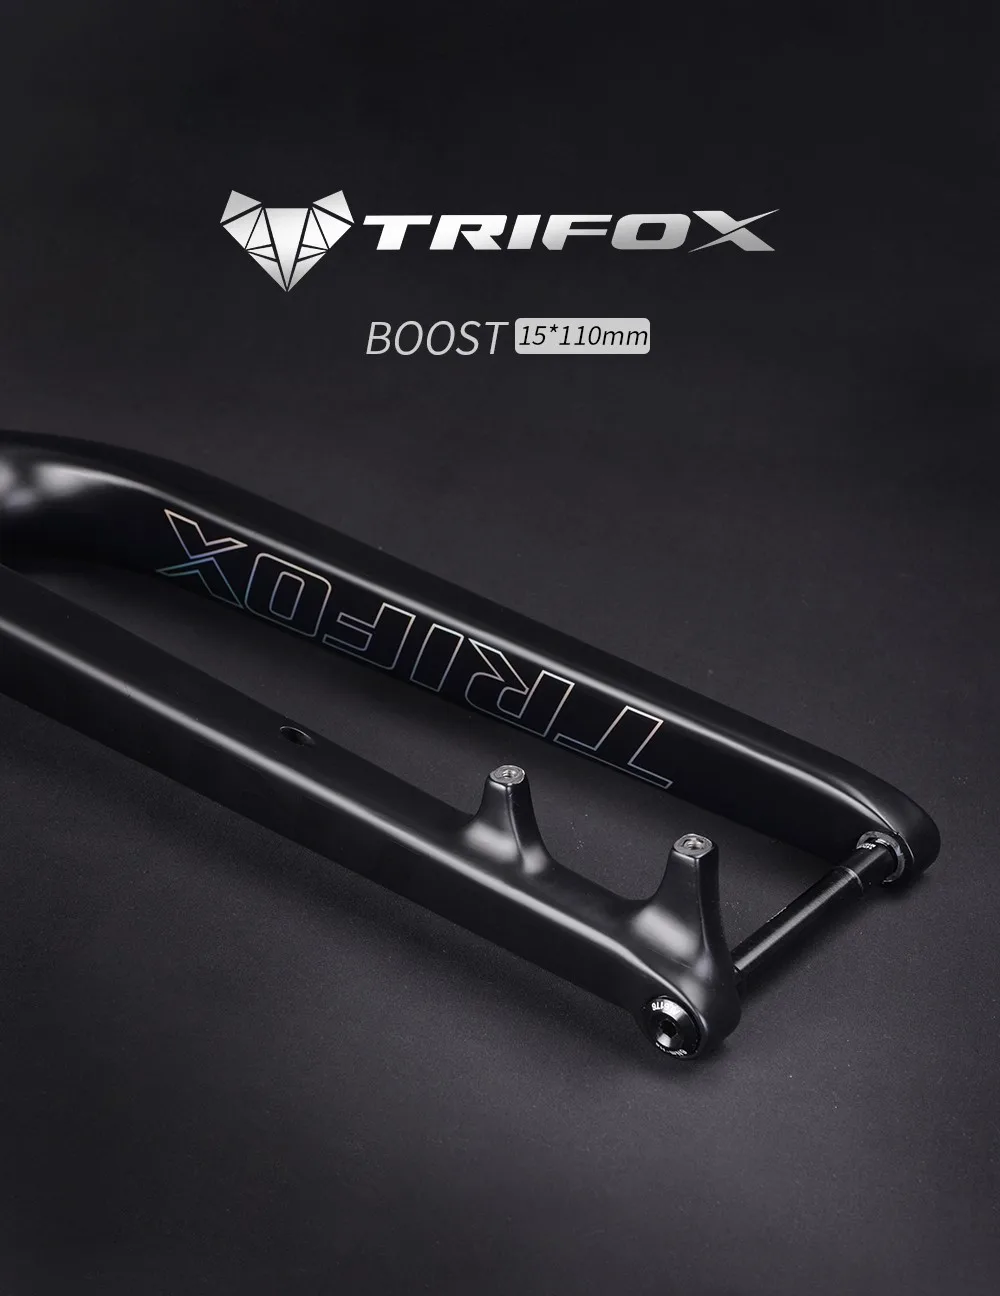 TRIFOX Light Weight 29er MTB Bicycle Rigid Fork Black Matte